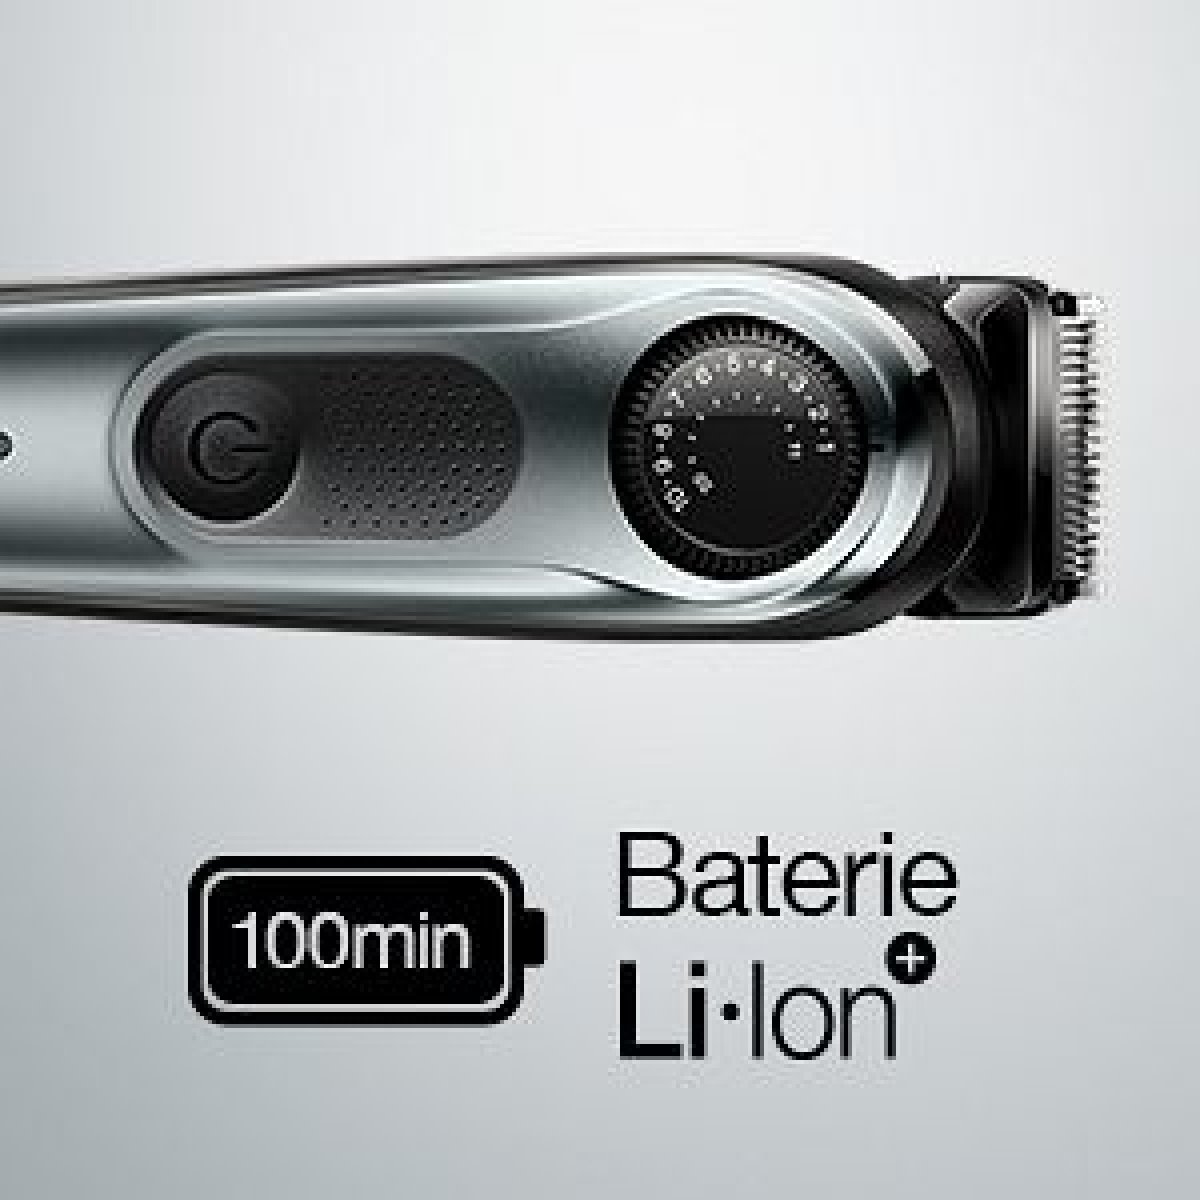 Lithium-iontová baterie s dlouhou výdrží